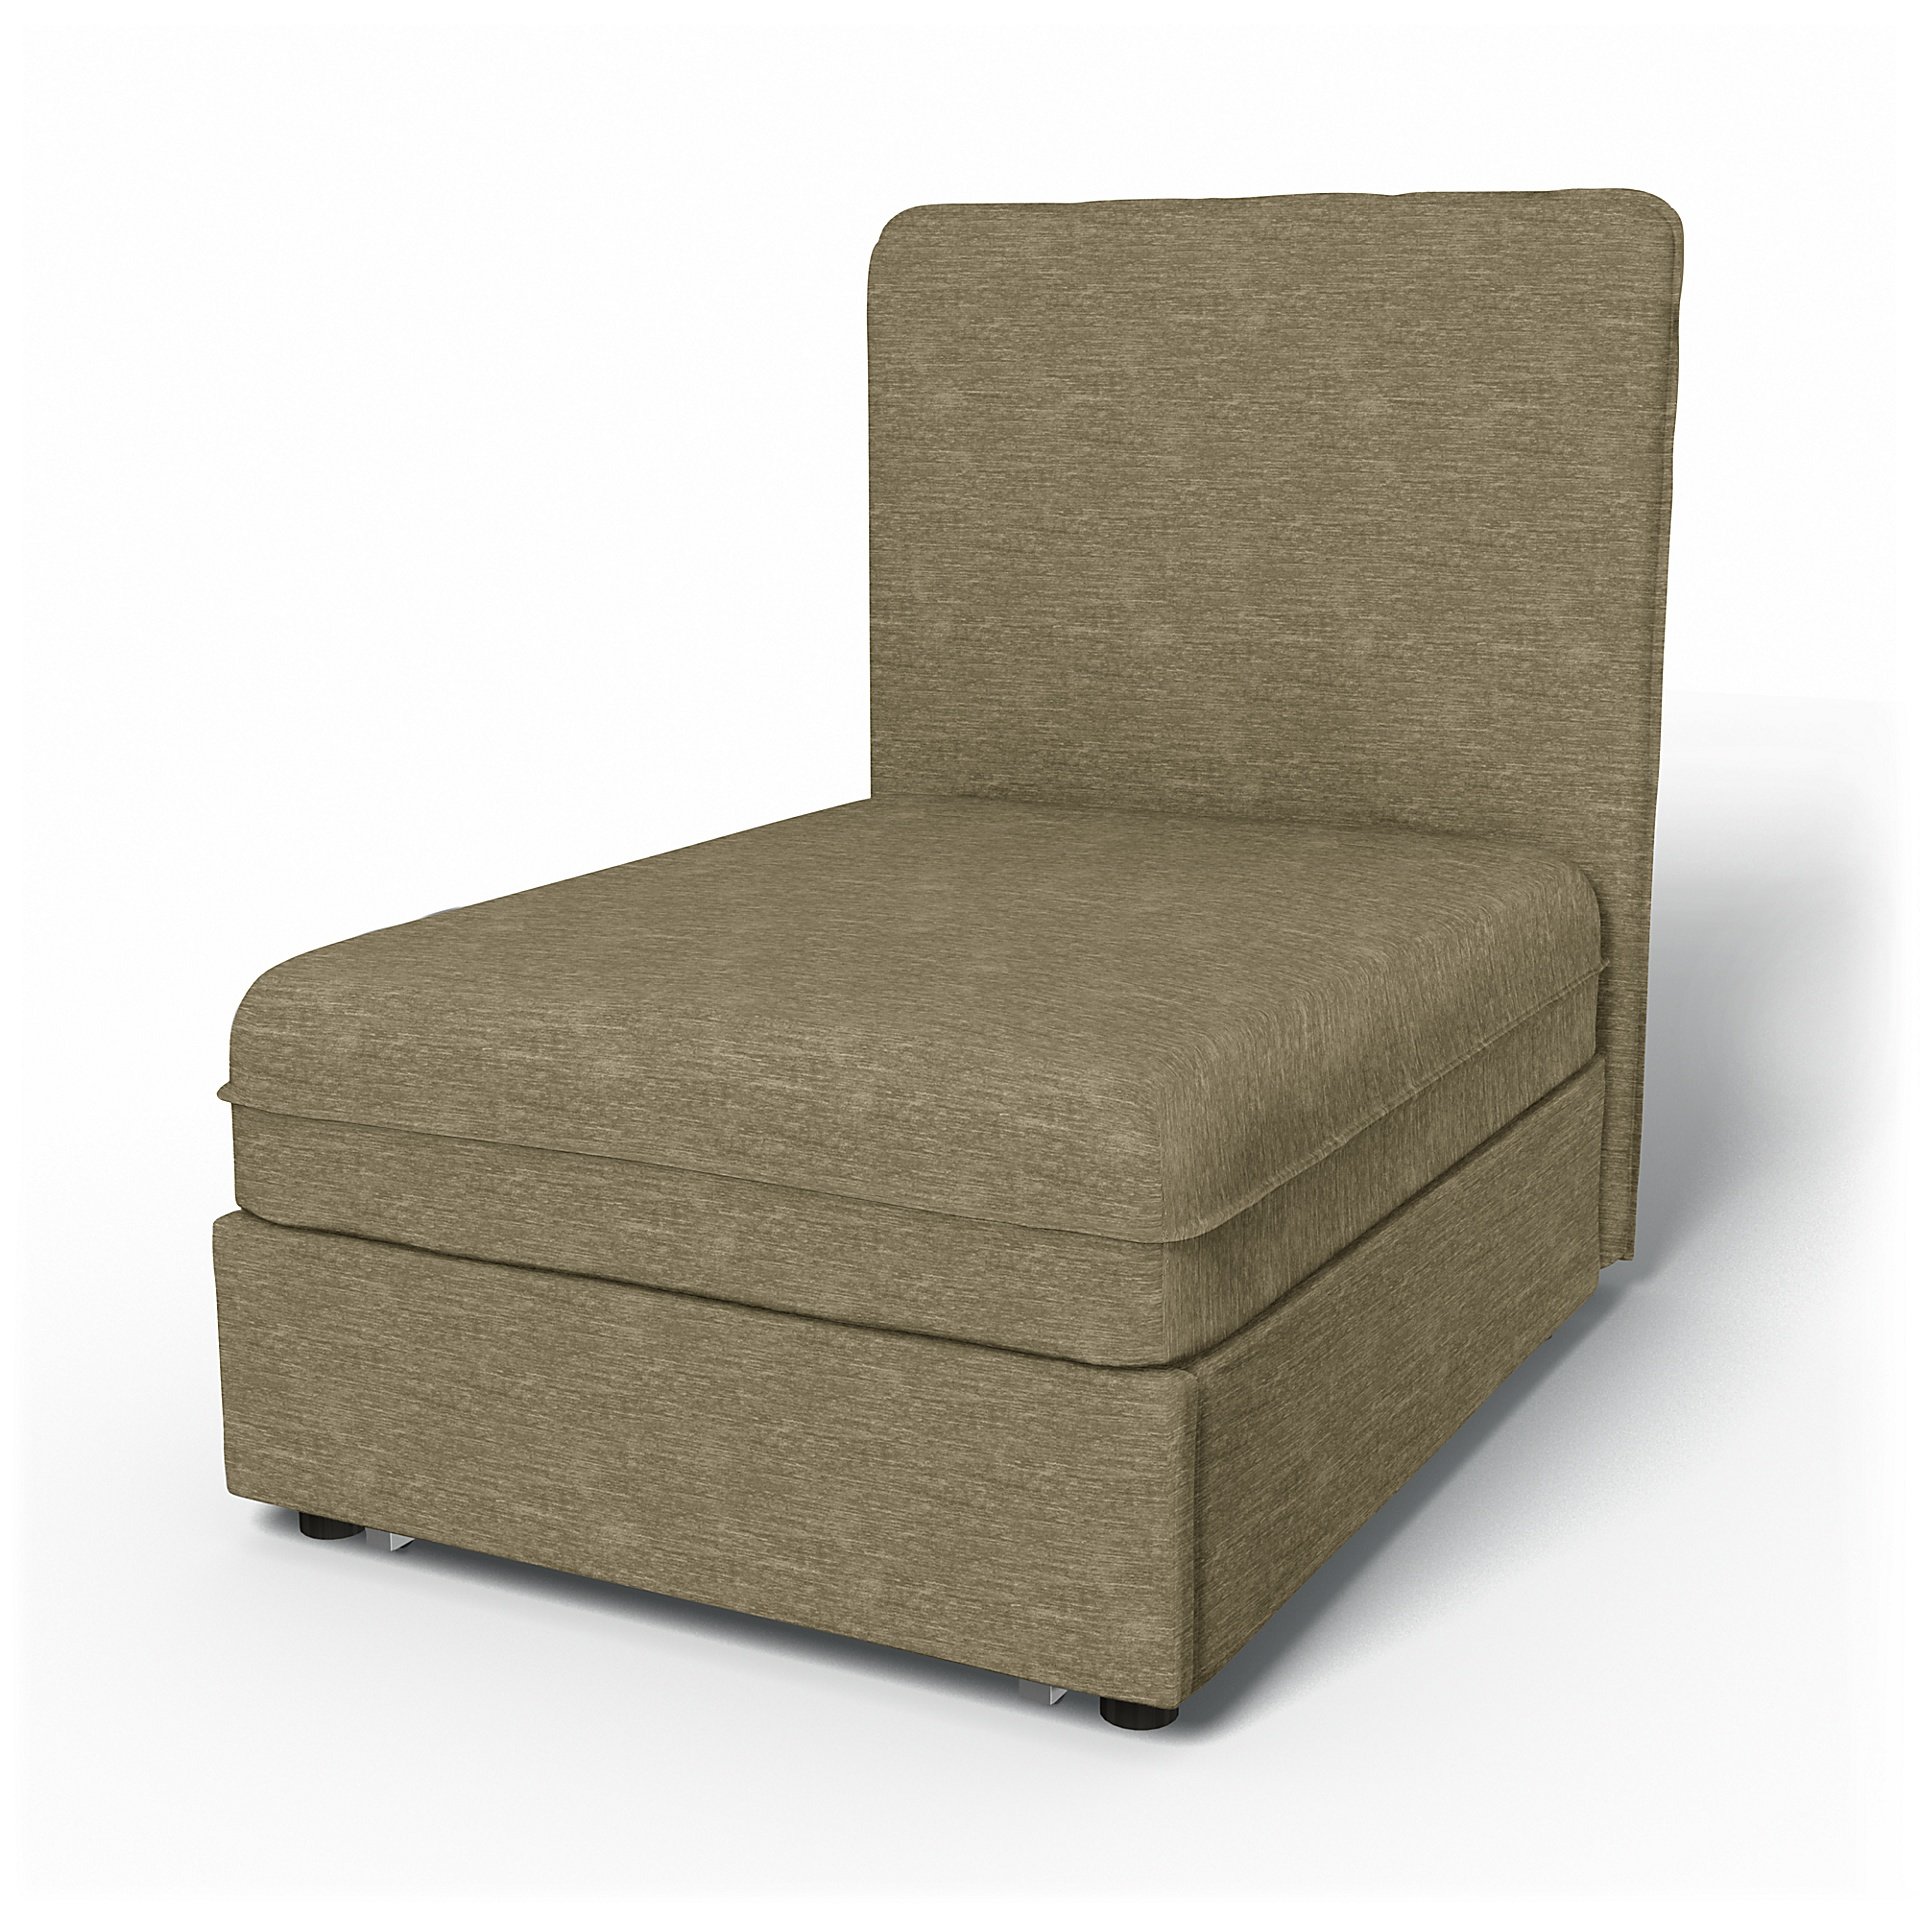 IKEA - Vallentuna Seat Module with High Back Sofa Bed Cover (80x100x46cm), Beige, Velvet - Bemz